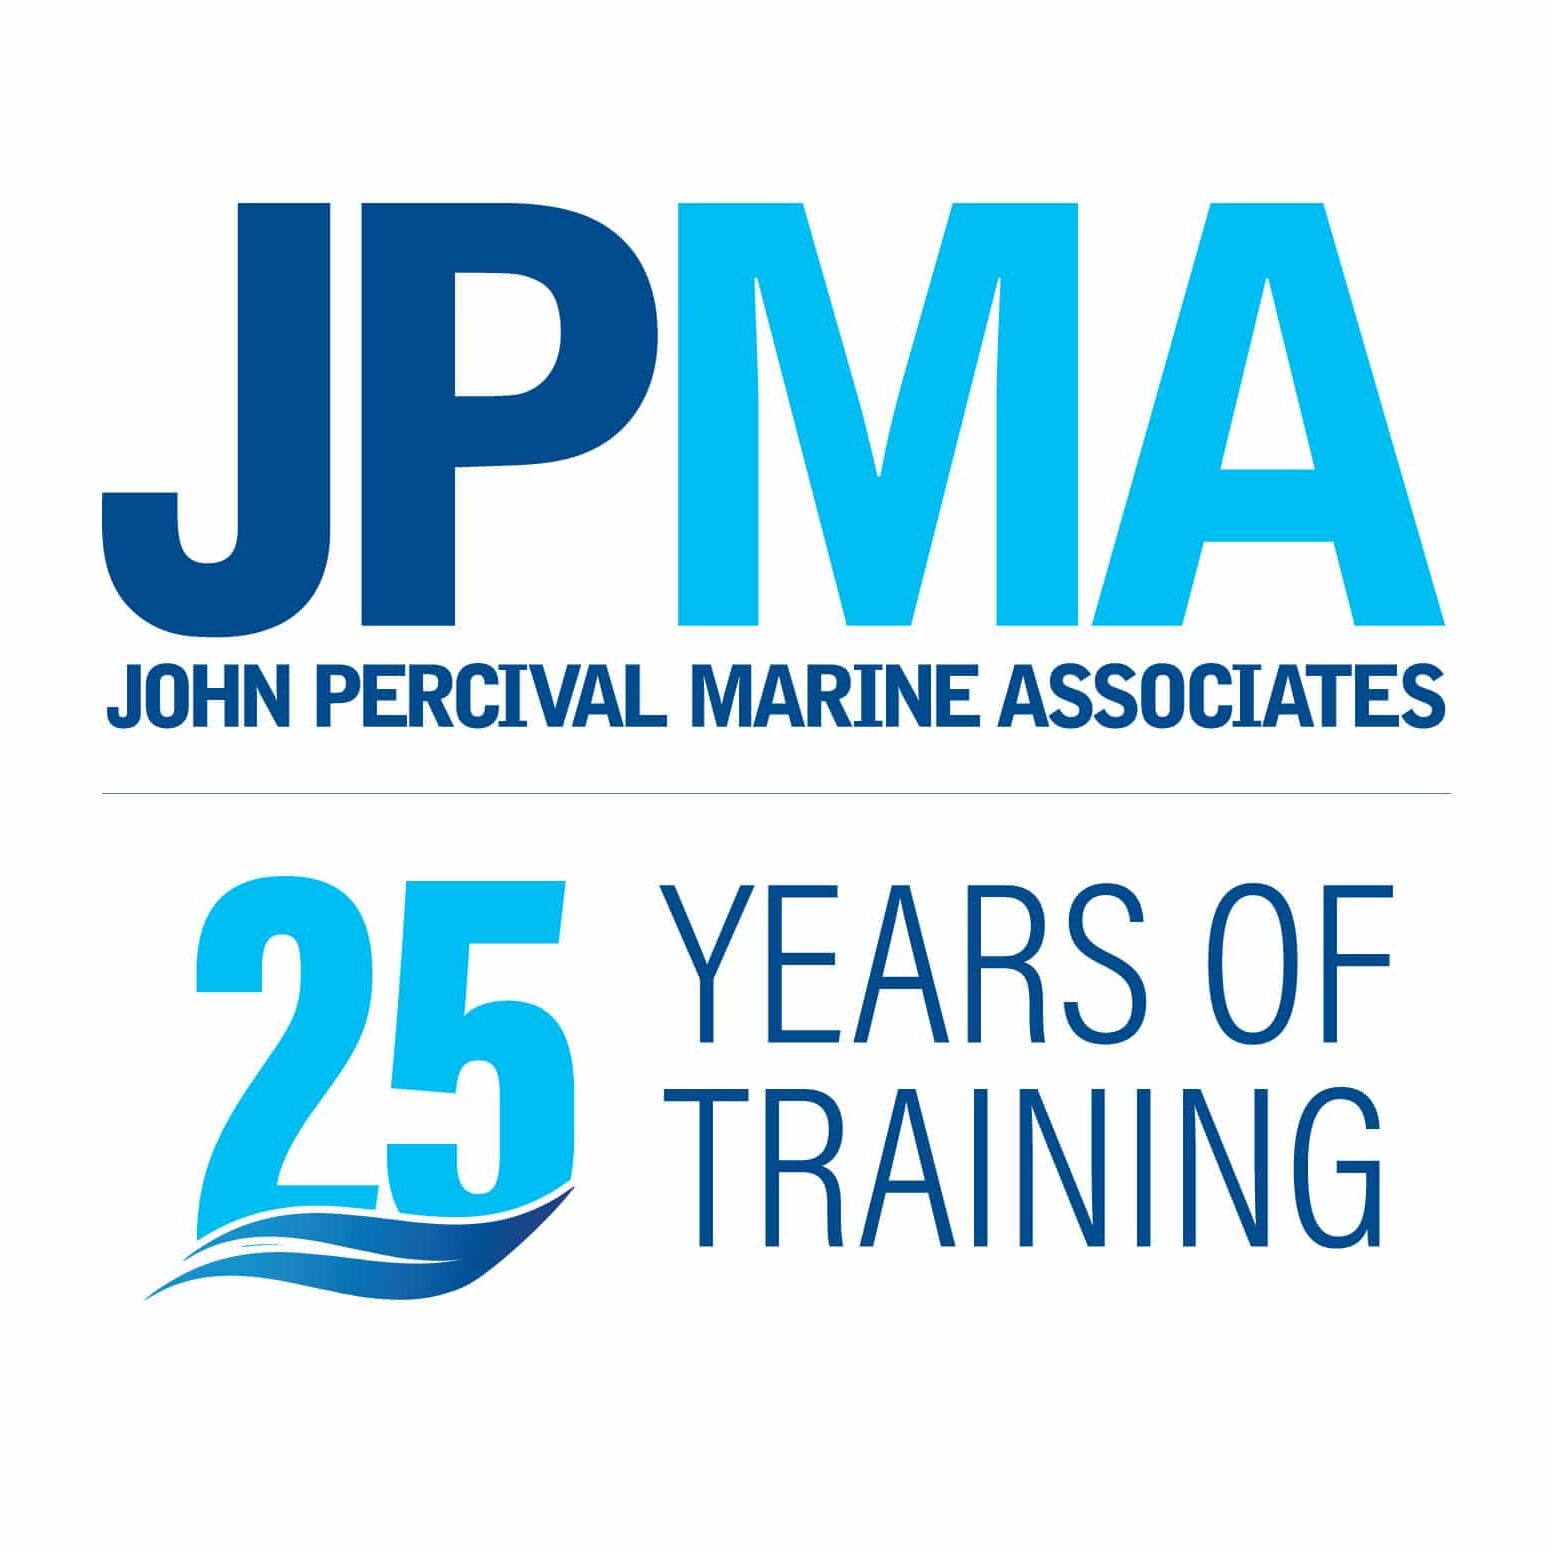 JPMA & Hoylake Sailing School Ltd